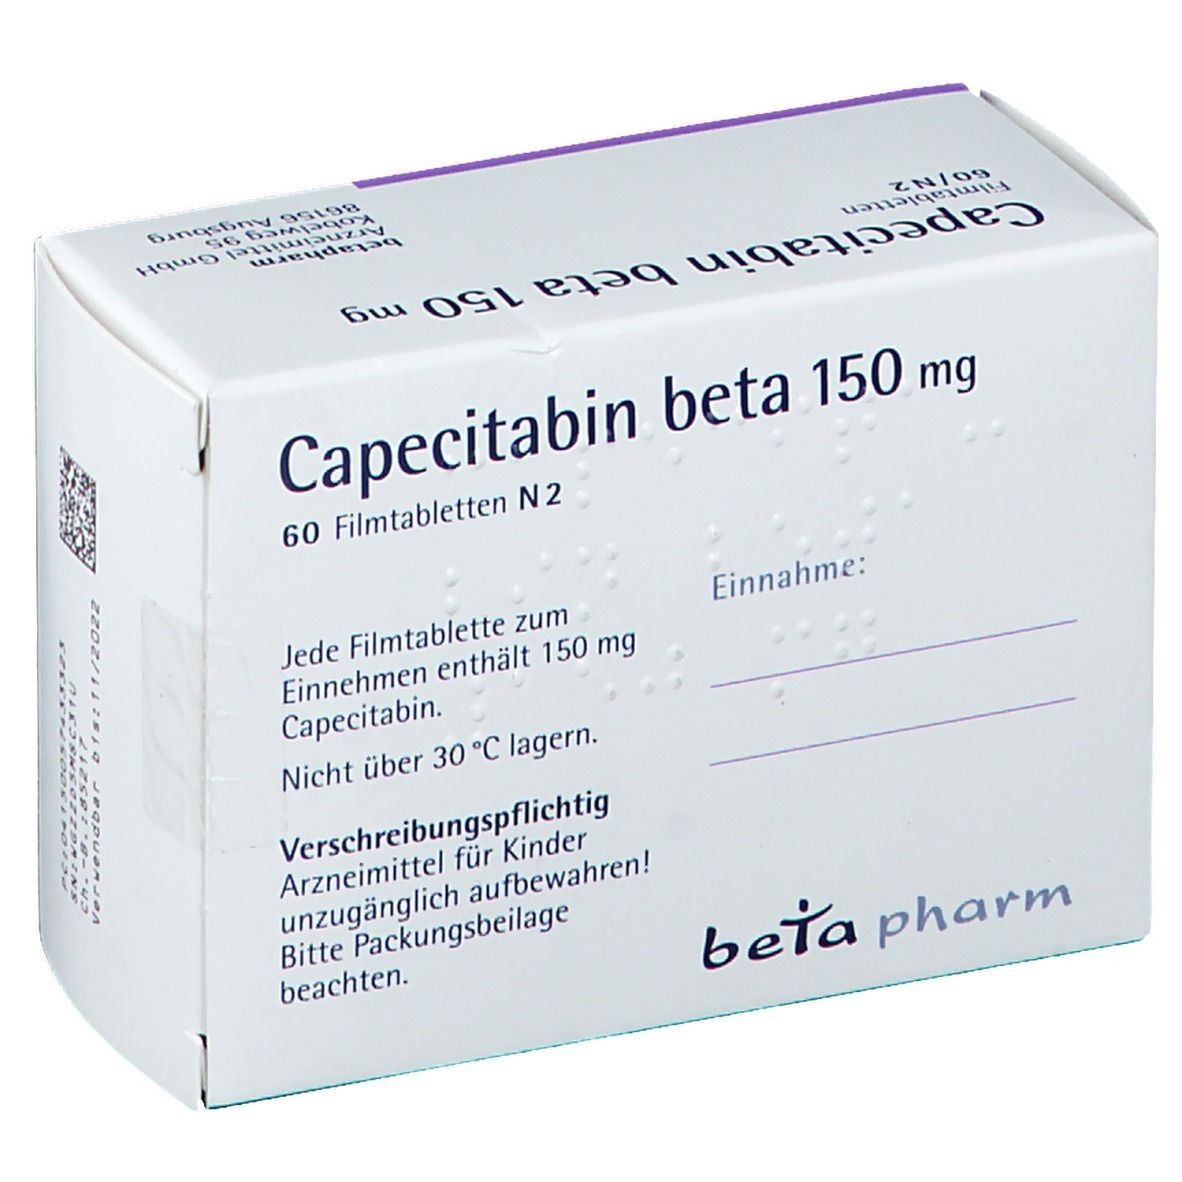 Capecitabin beta 150 mg